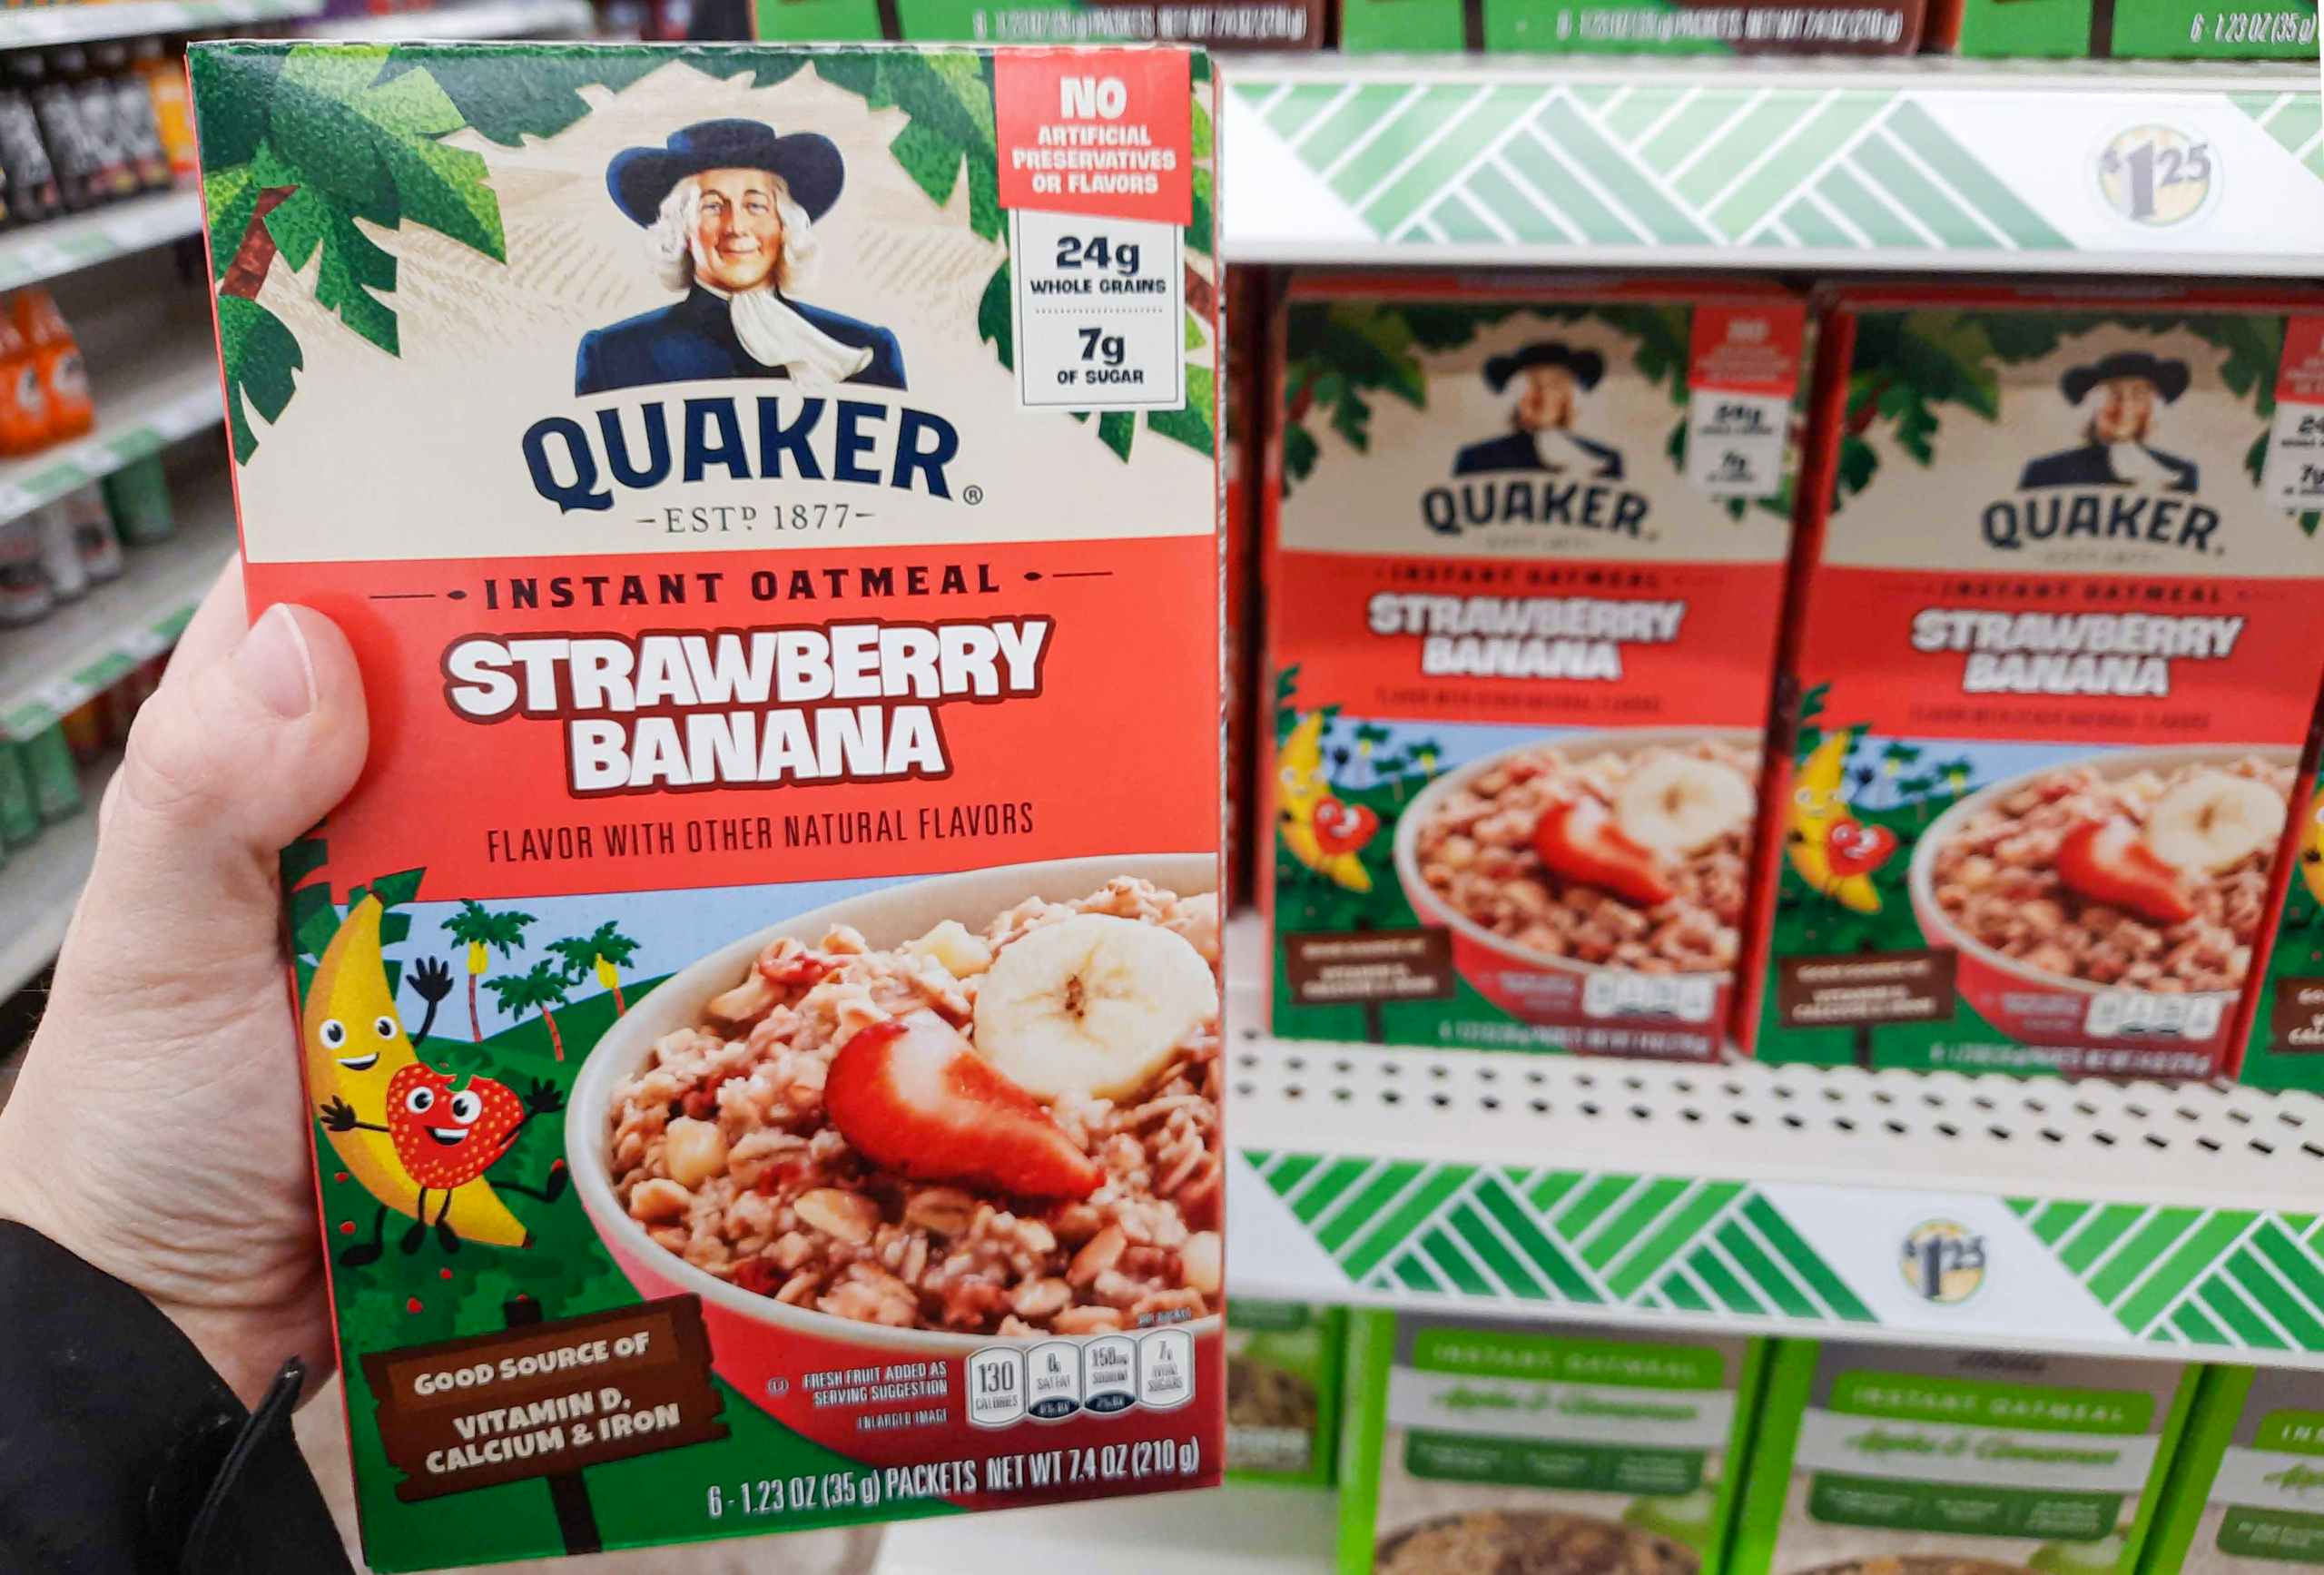 Quaker Oatmeal Strawberry Banana flavor at Dollar Tree